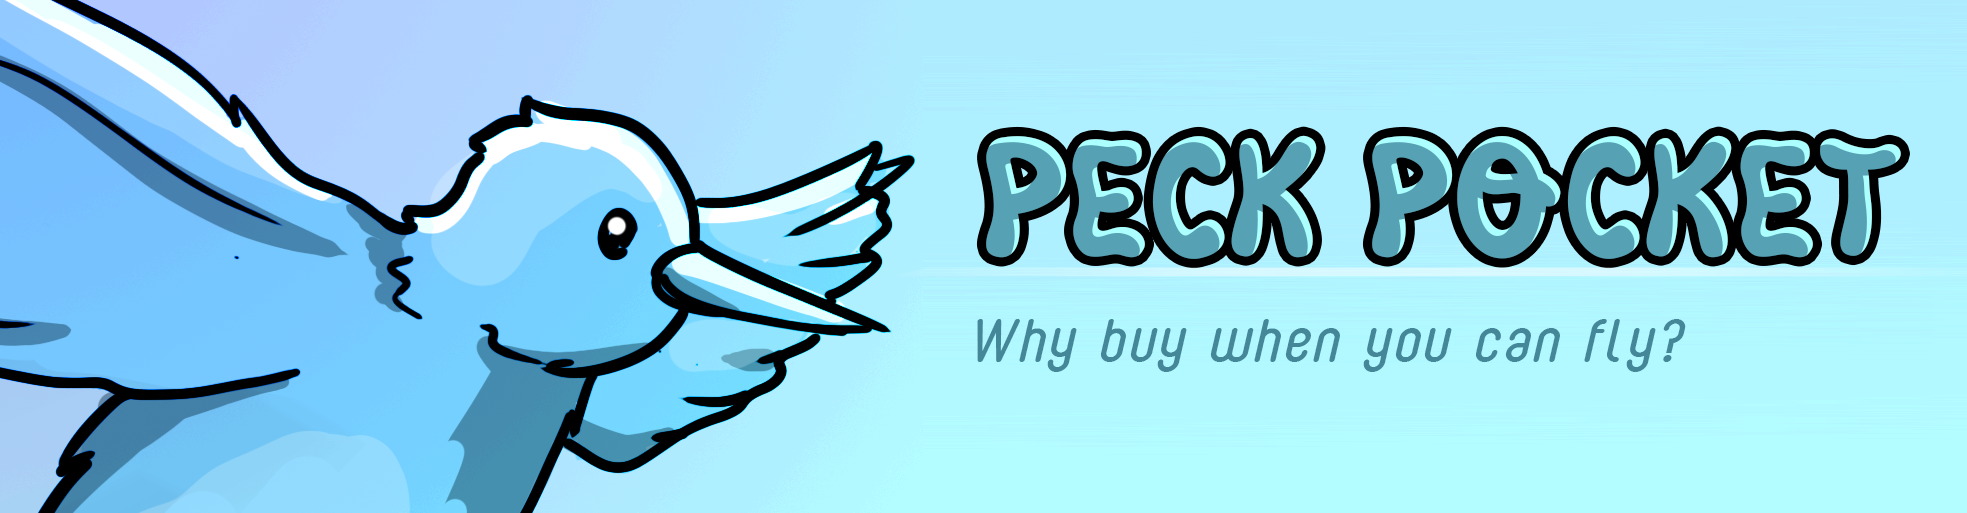 Peck Pocket